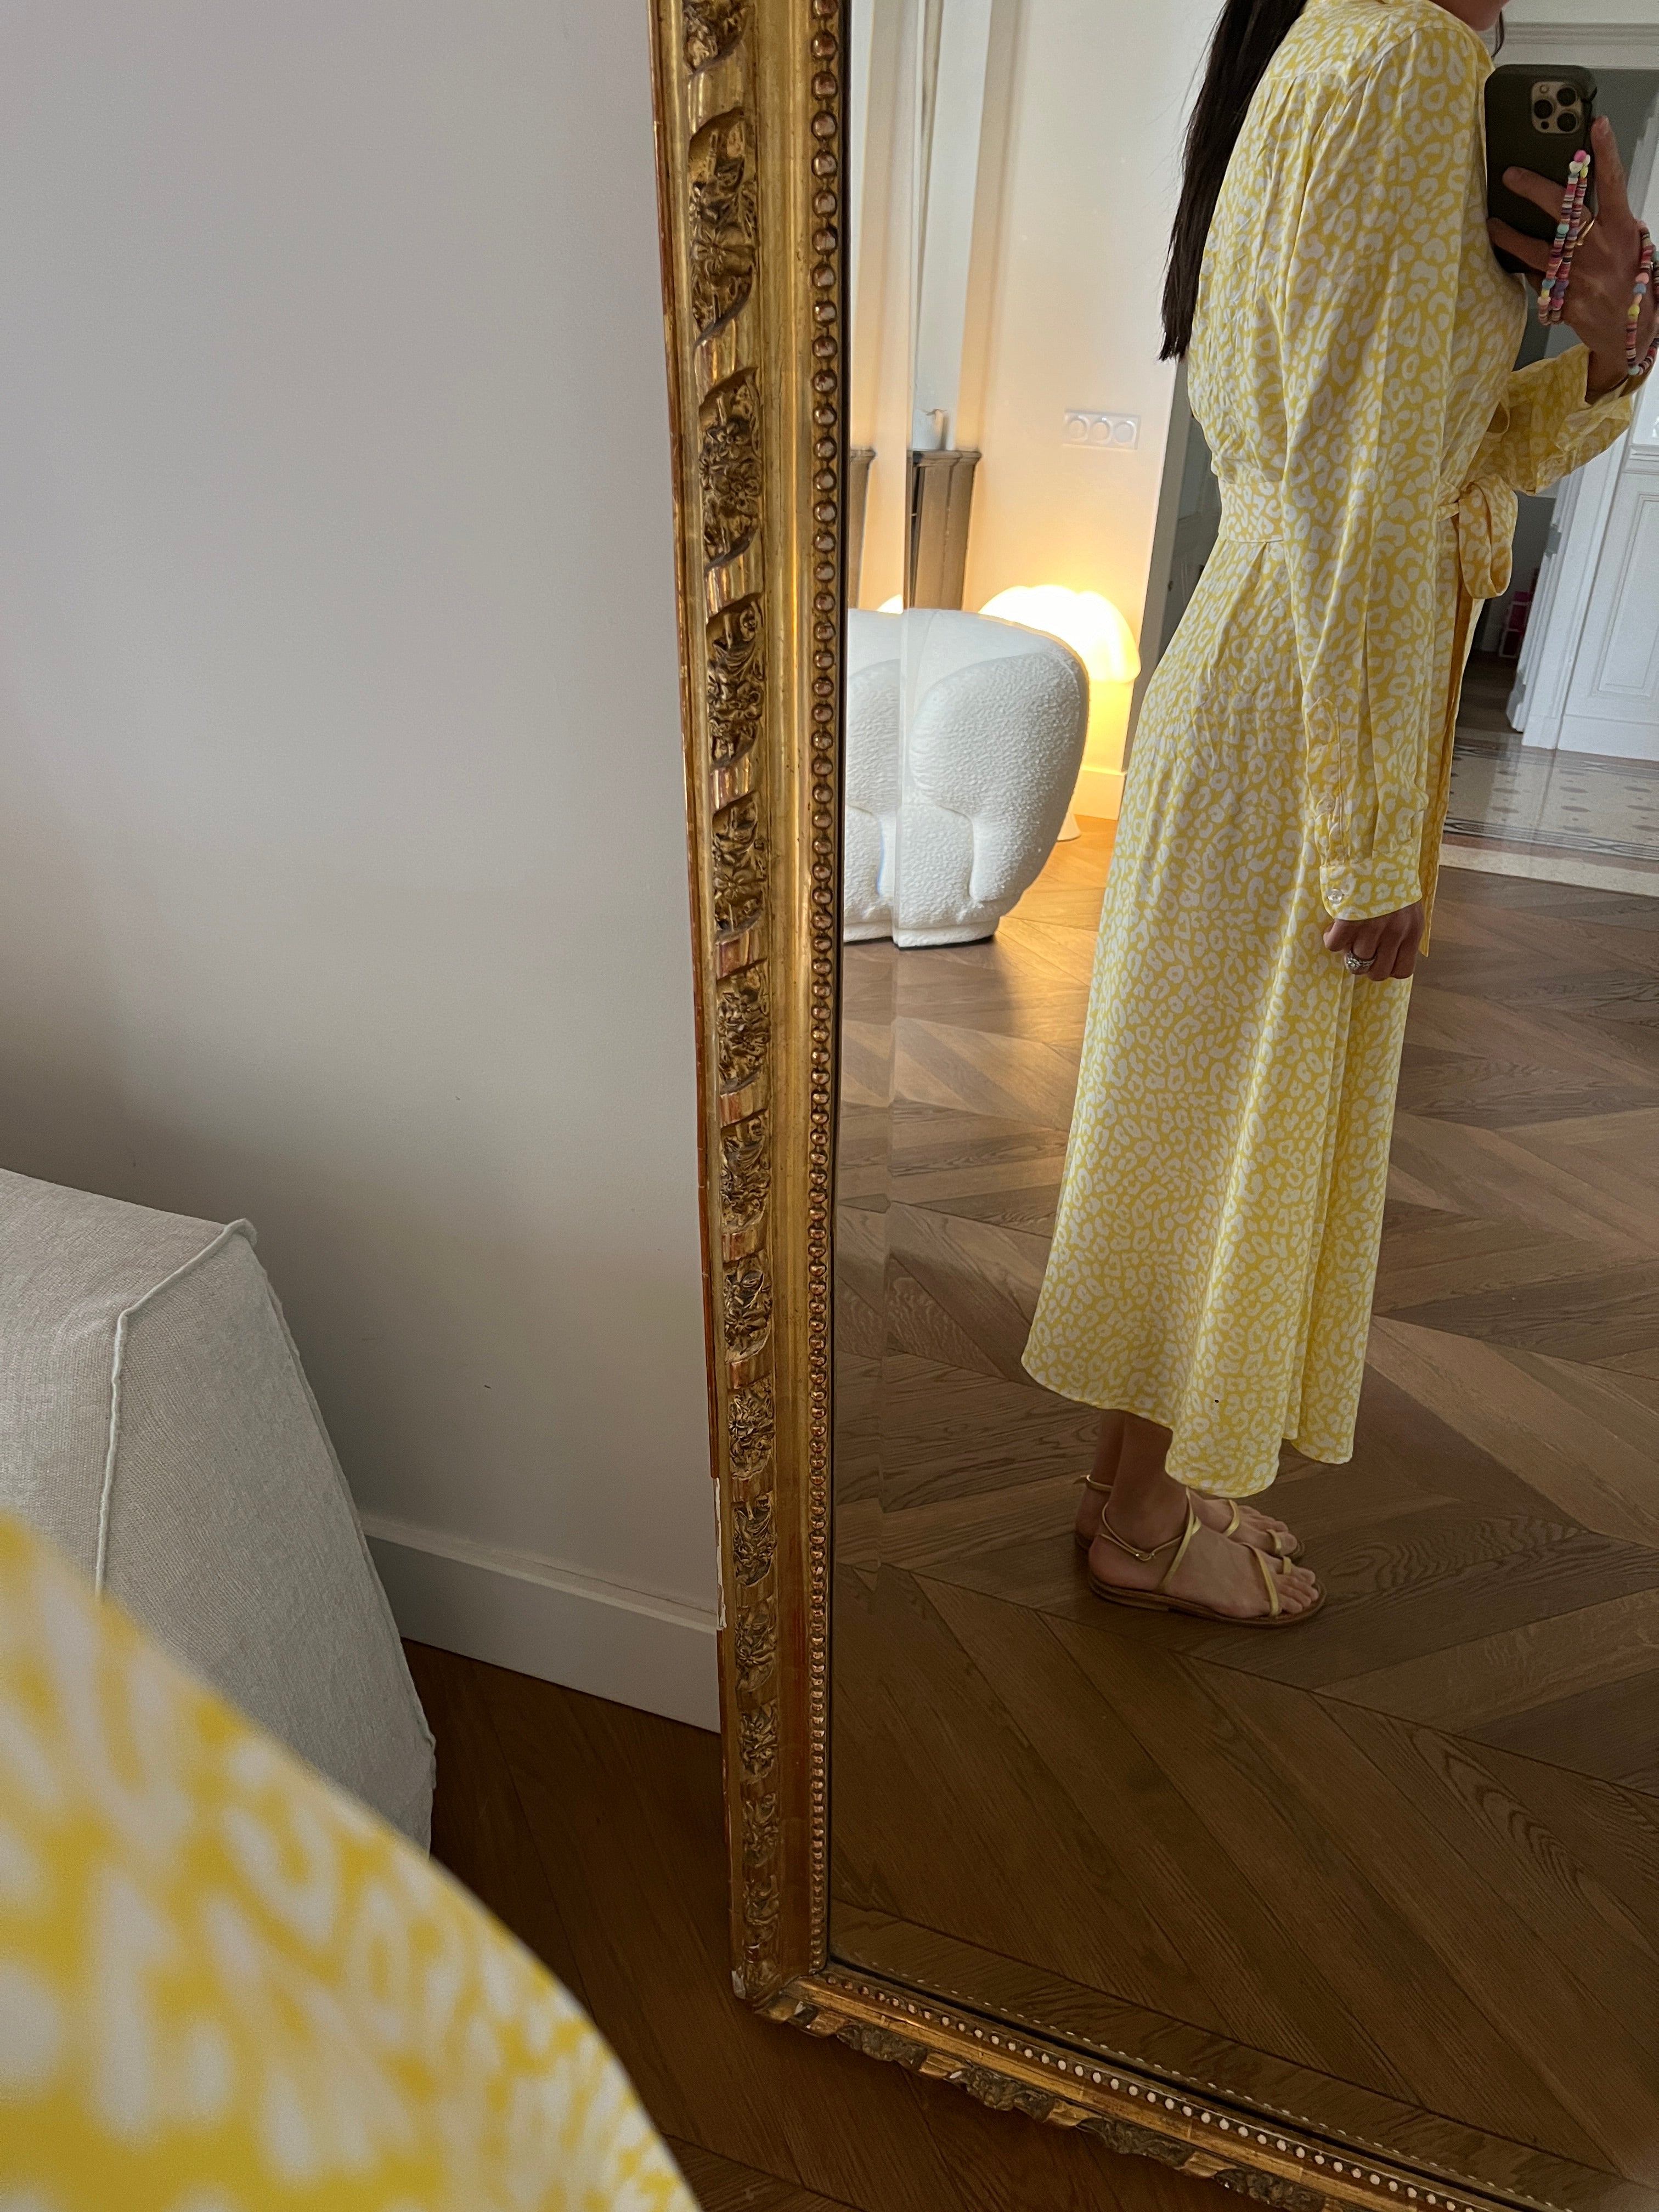 Aurianne Sinacola Robe jaune Kiwi Saint Tropez